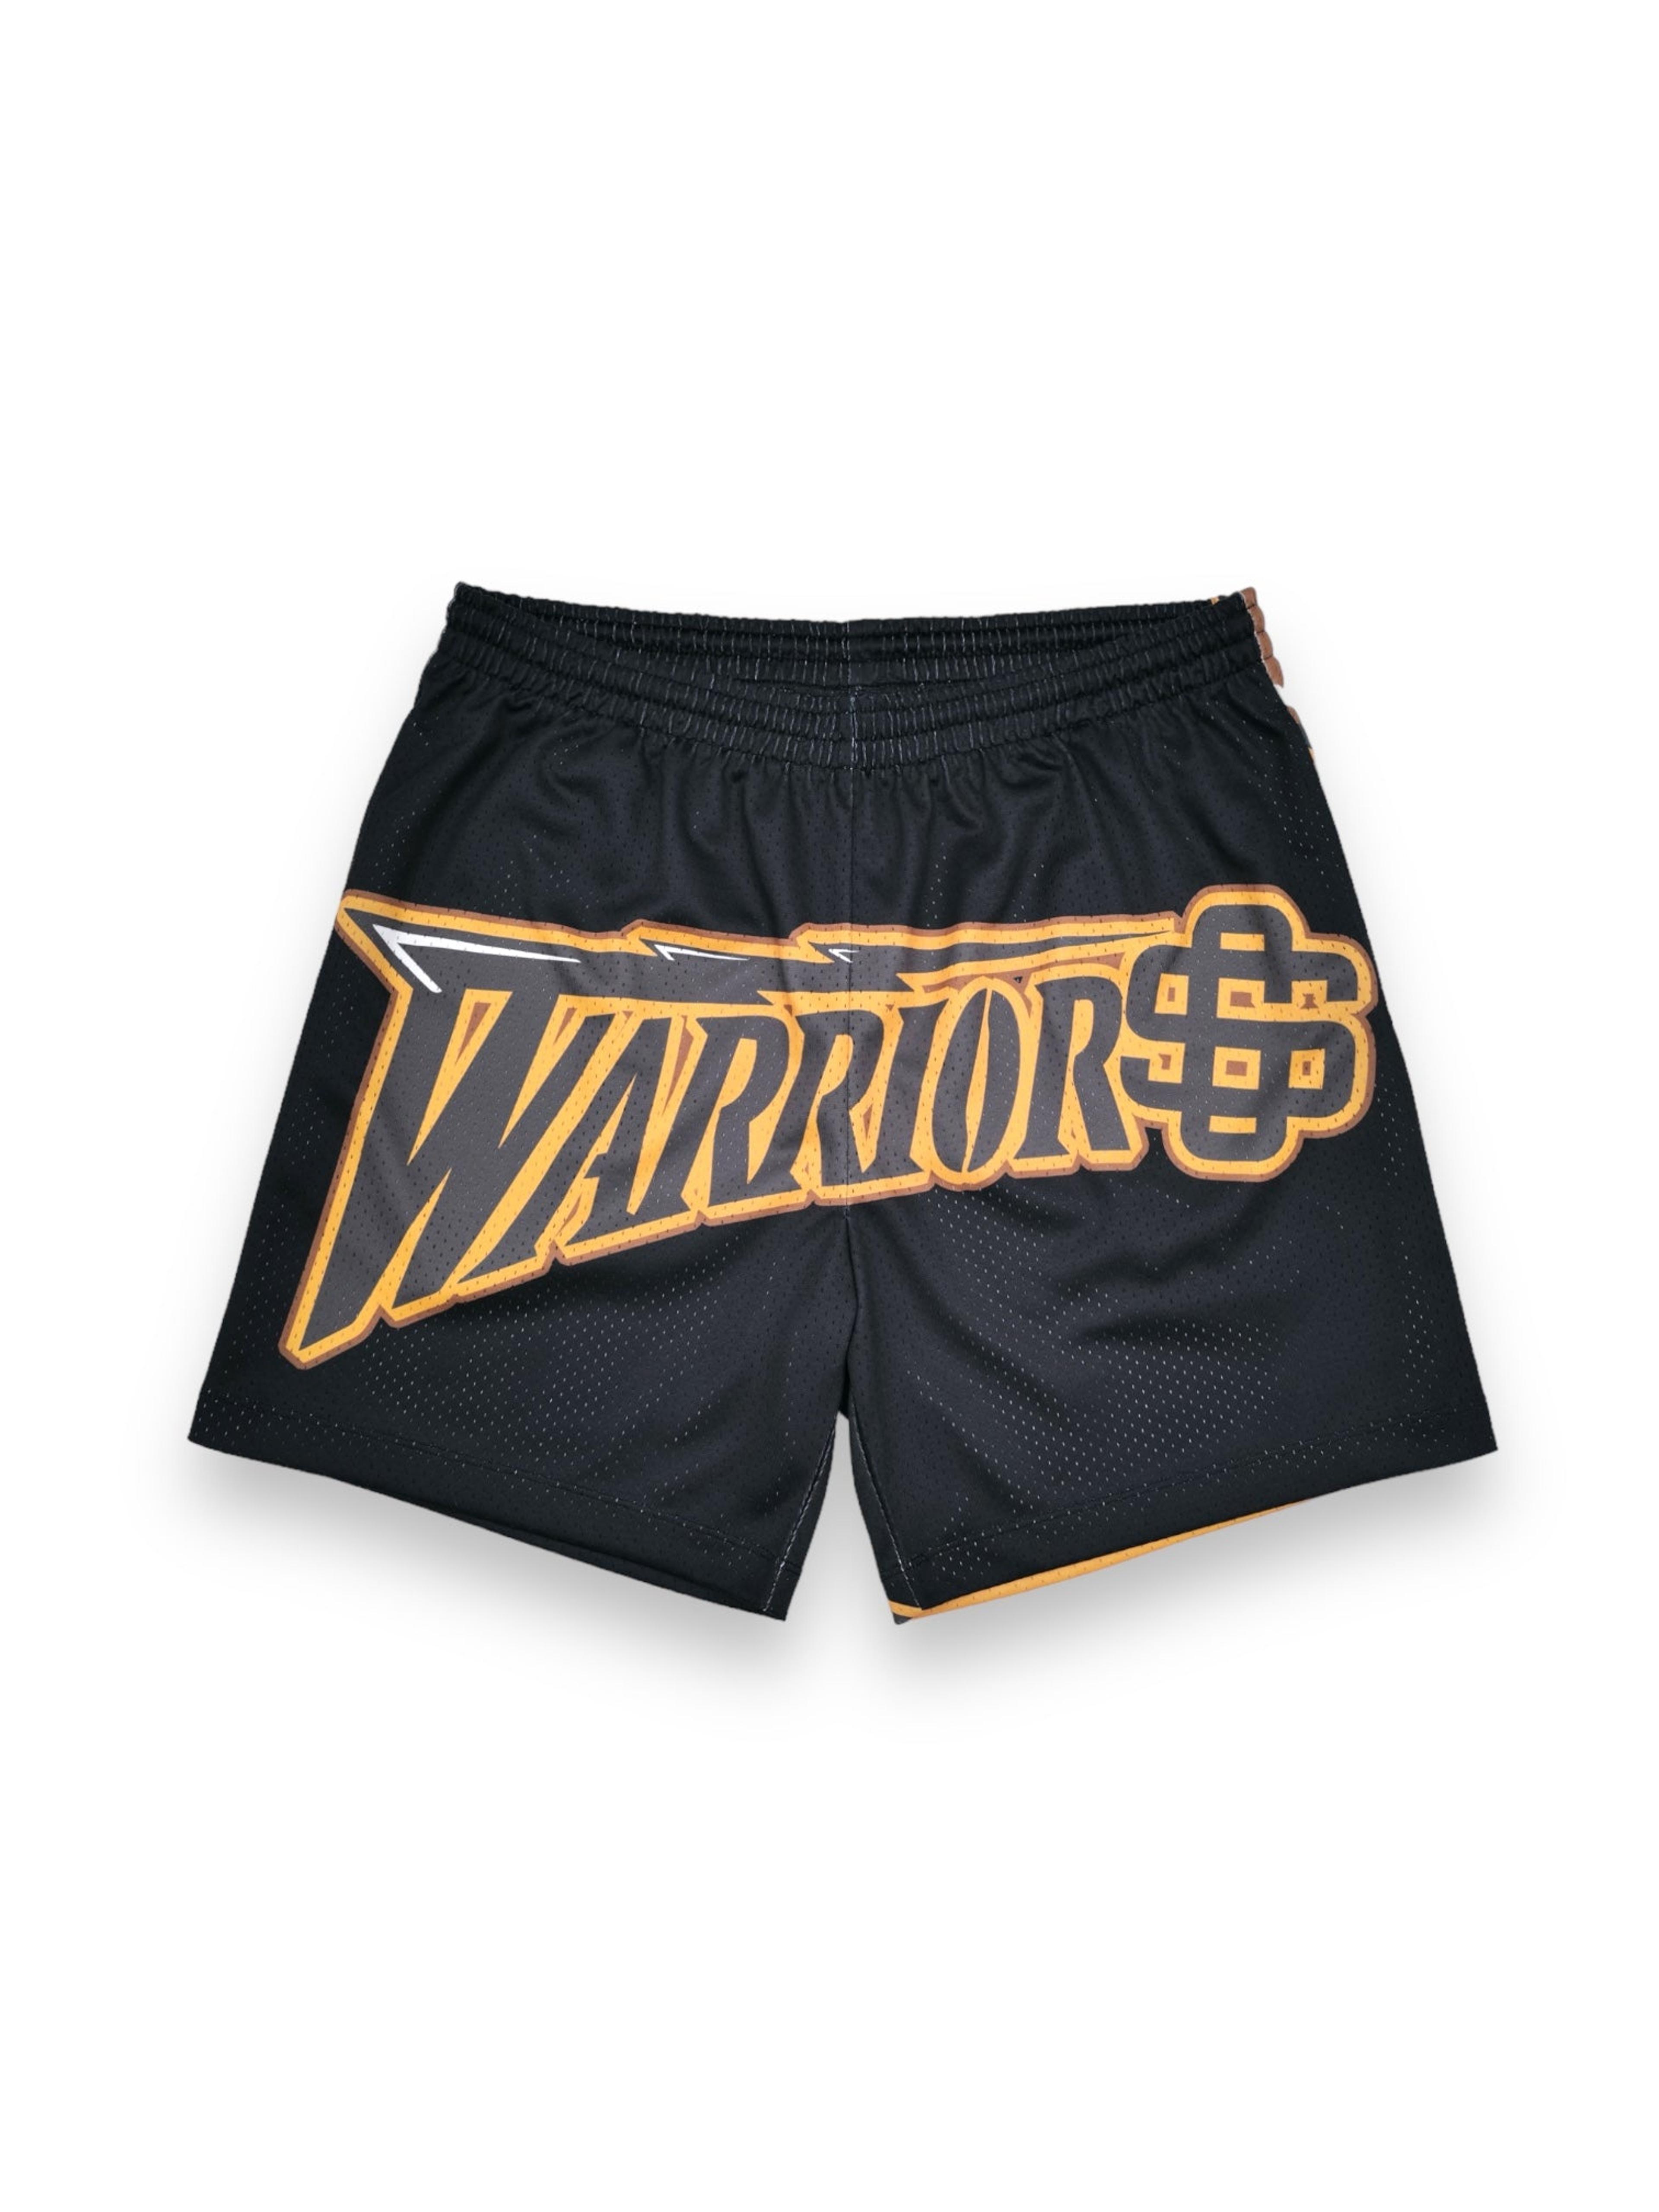 Warriors shorts